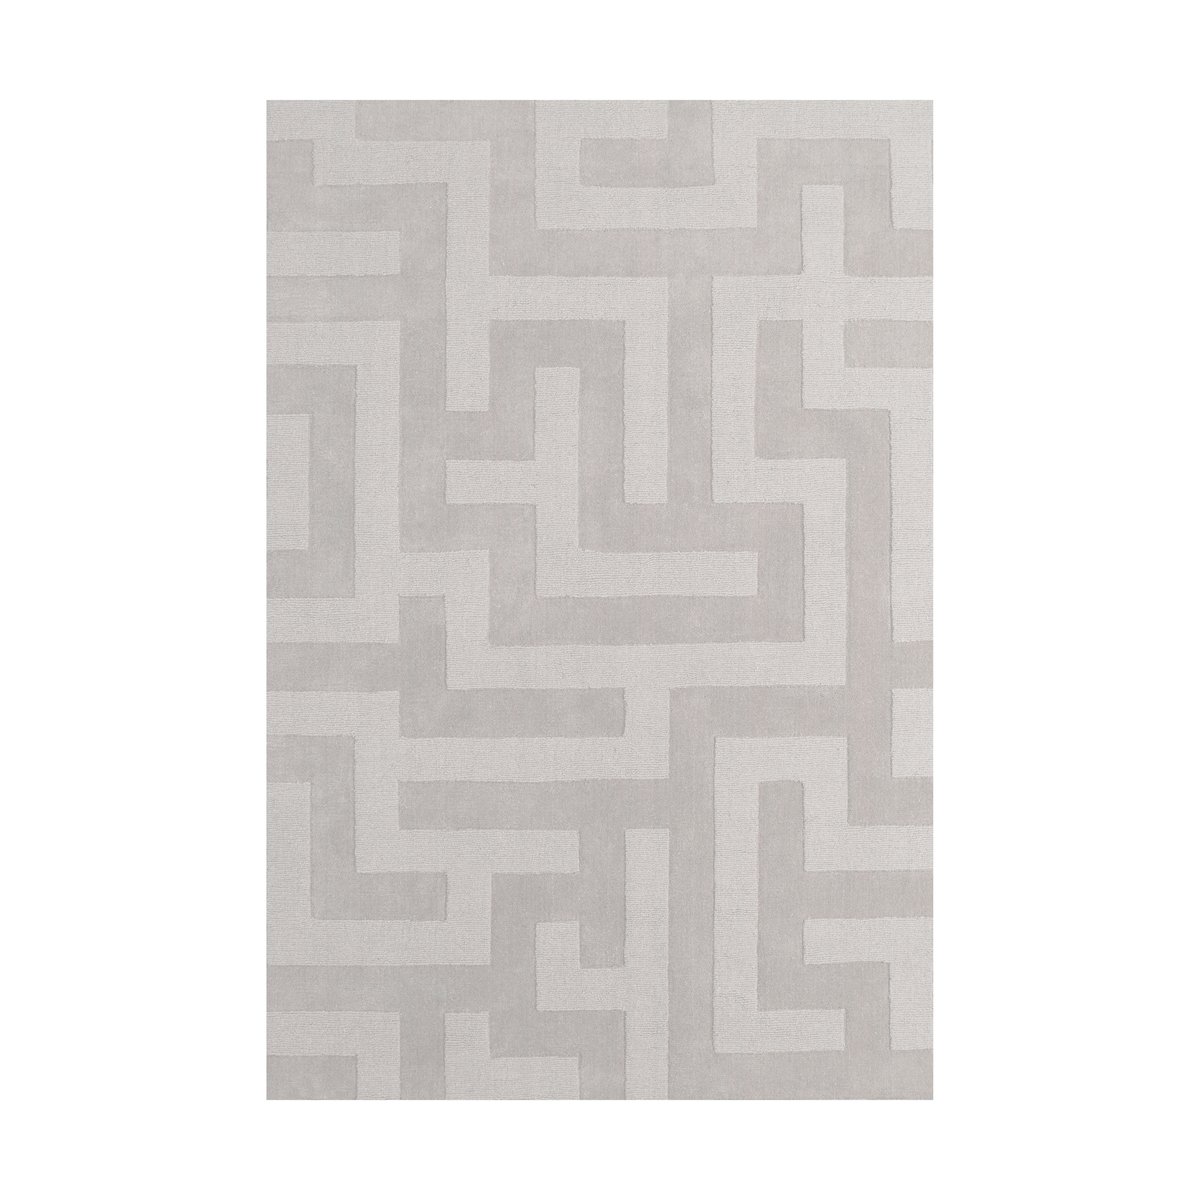 Layered Byzantine grande wollen vloerkleed Simply gray, 250x350 cm